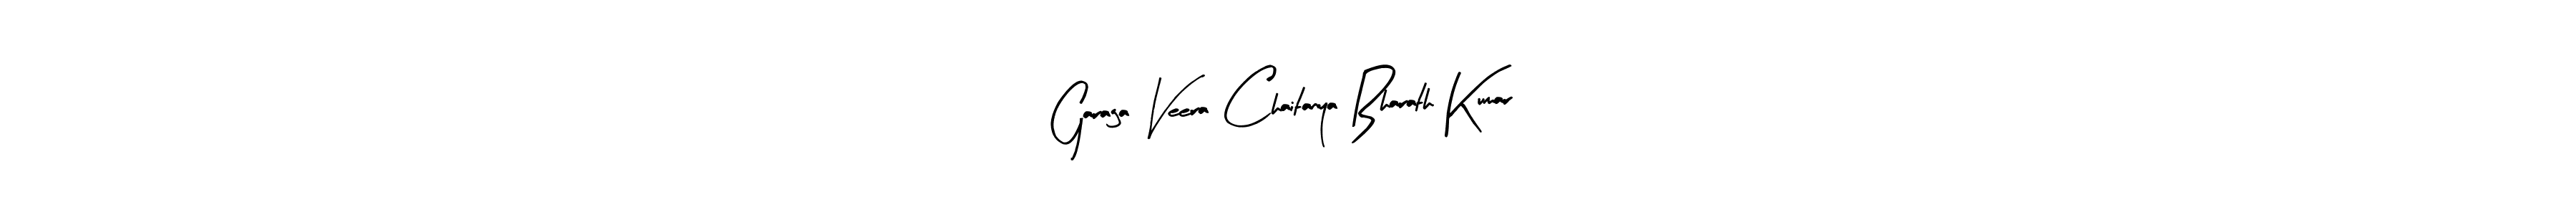 How to Draw Garaga Veera Chaitanya Bharath Kumar signature style? Arty Signature is a latest design signature styles for name Garaga Veera Chaitanya Bharath Kumar. Garaga Veera Chaitanya Bharath Kumar signature style 8 images and pictures png